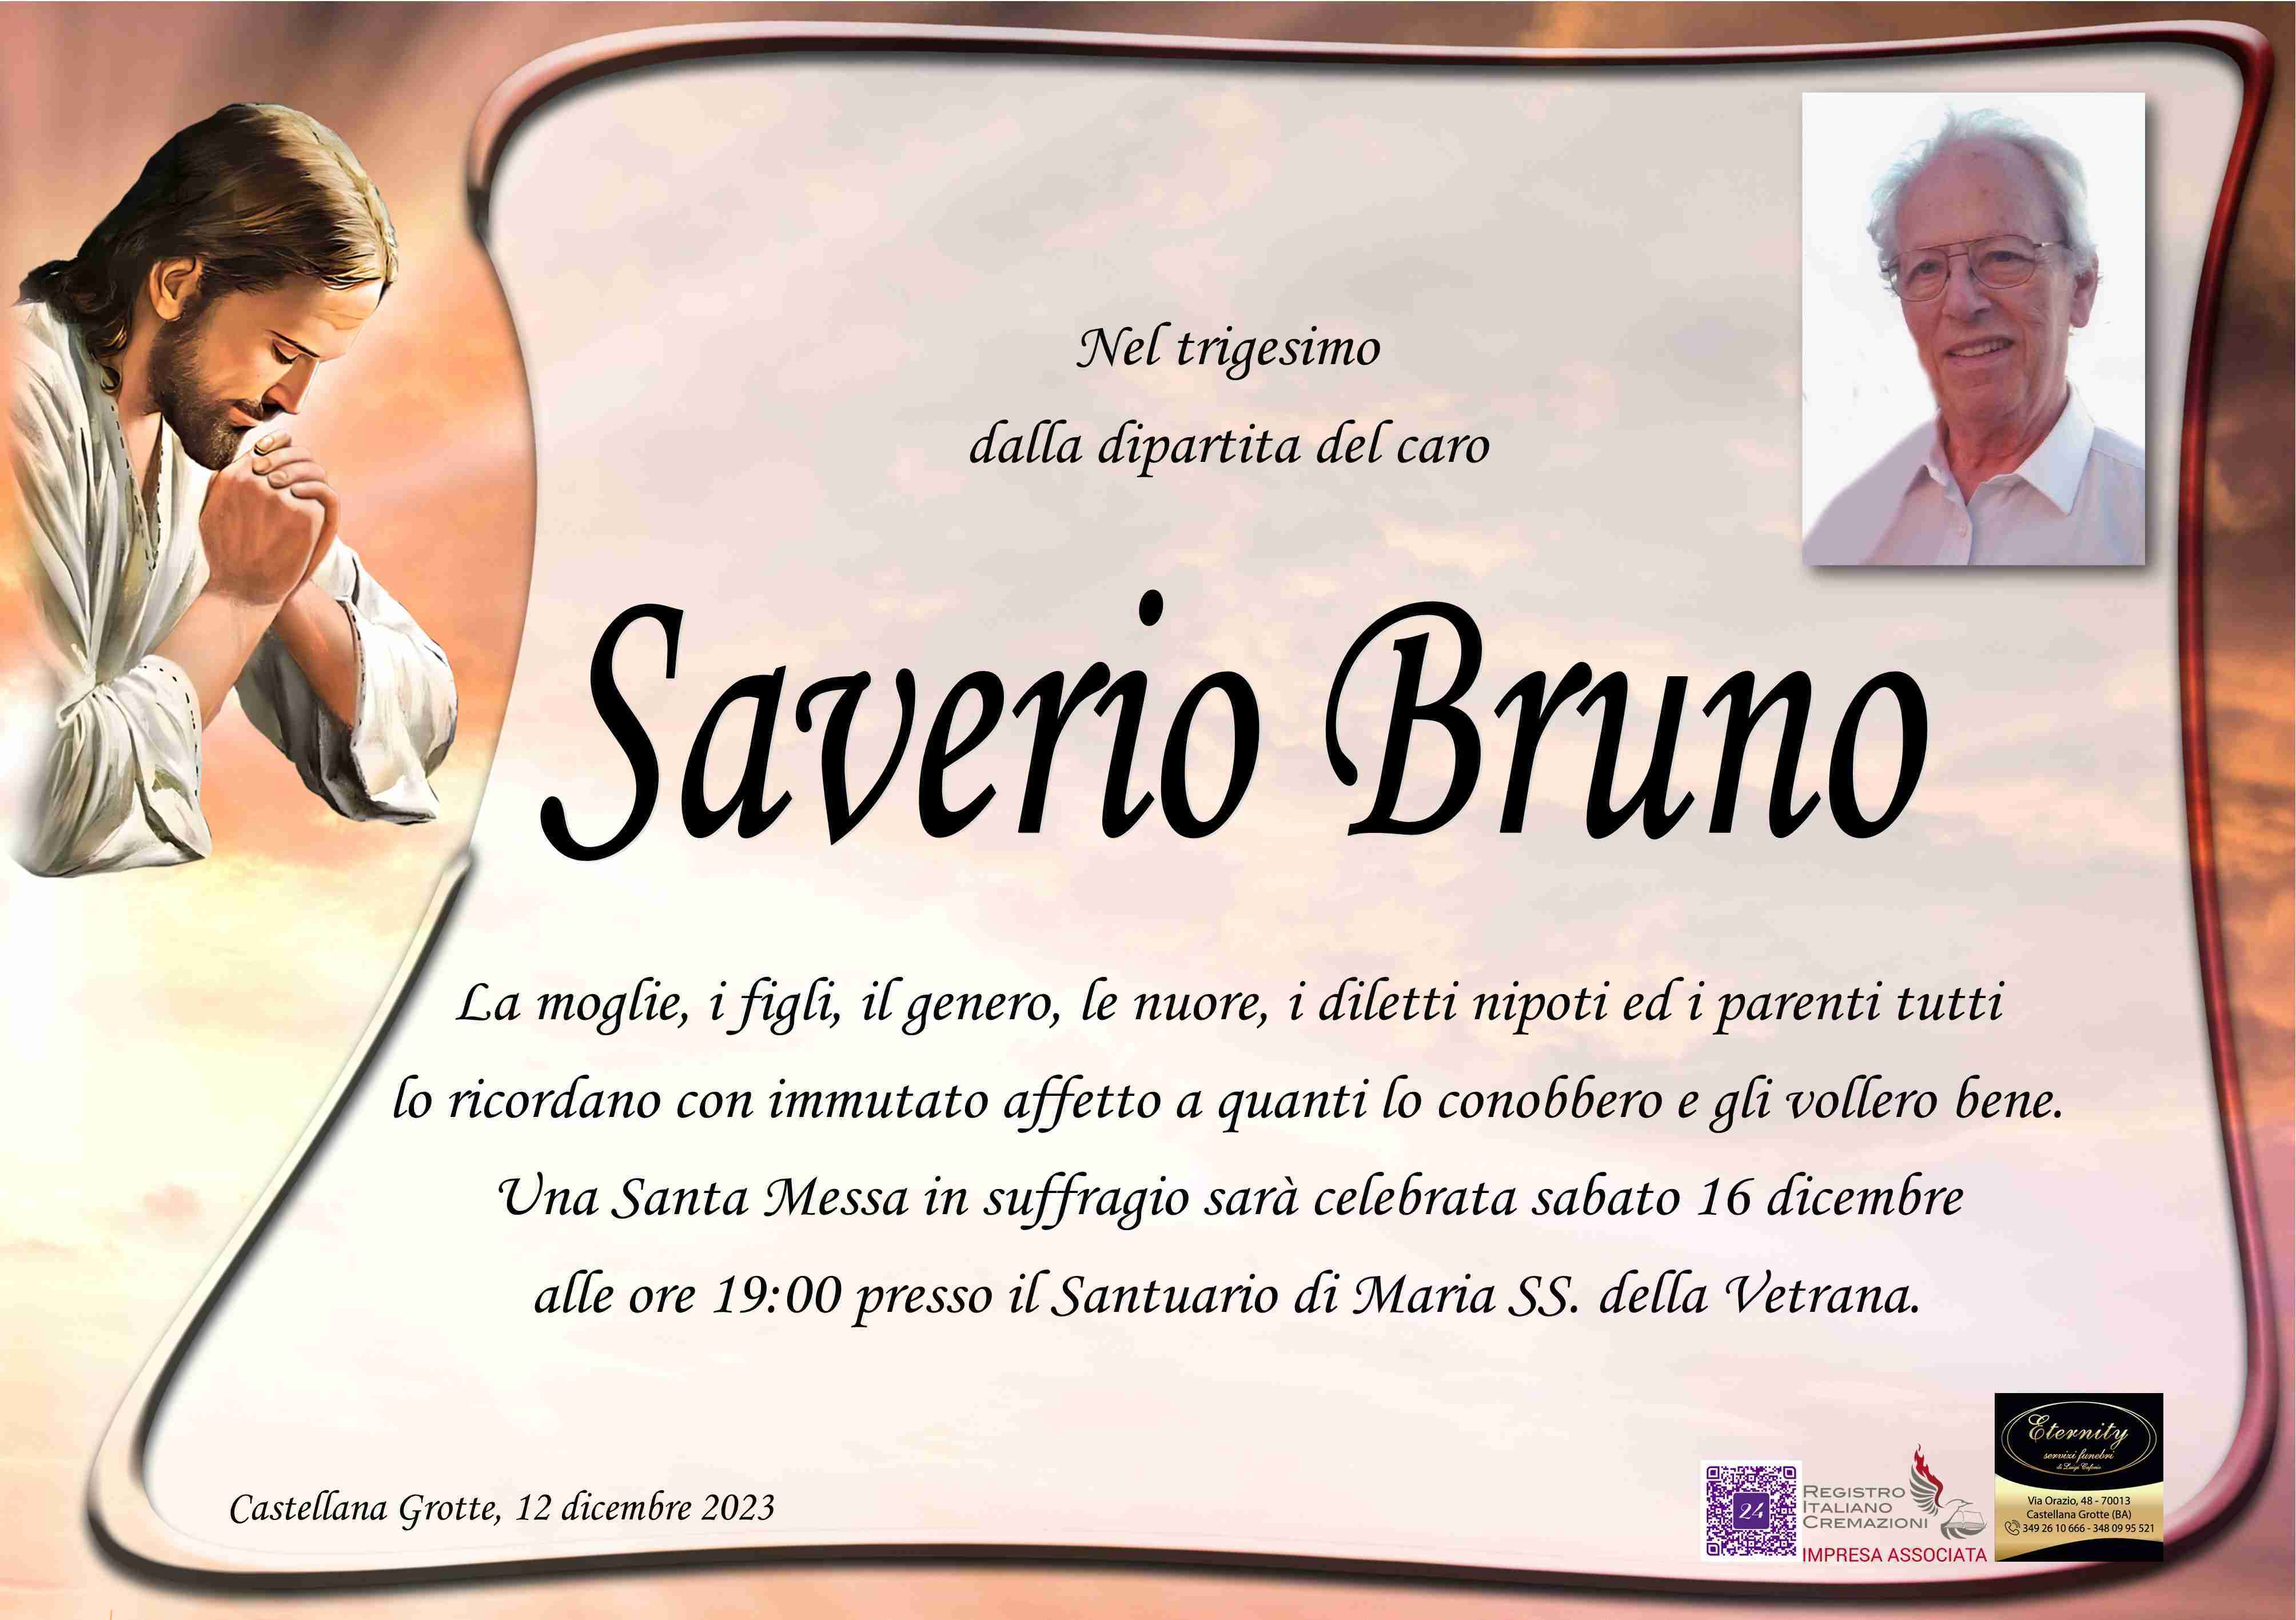 Saverio Bruno